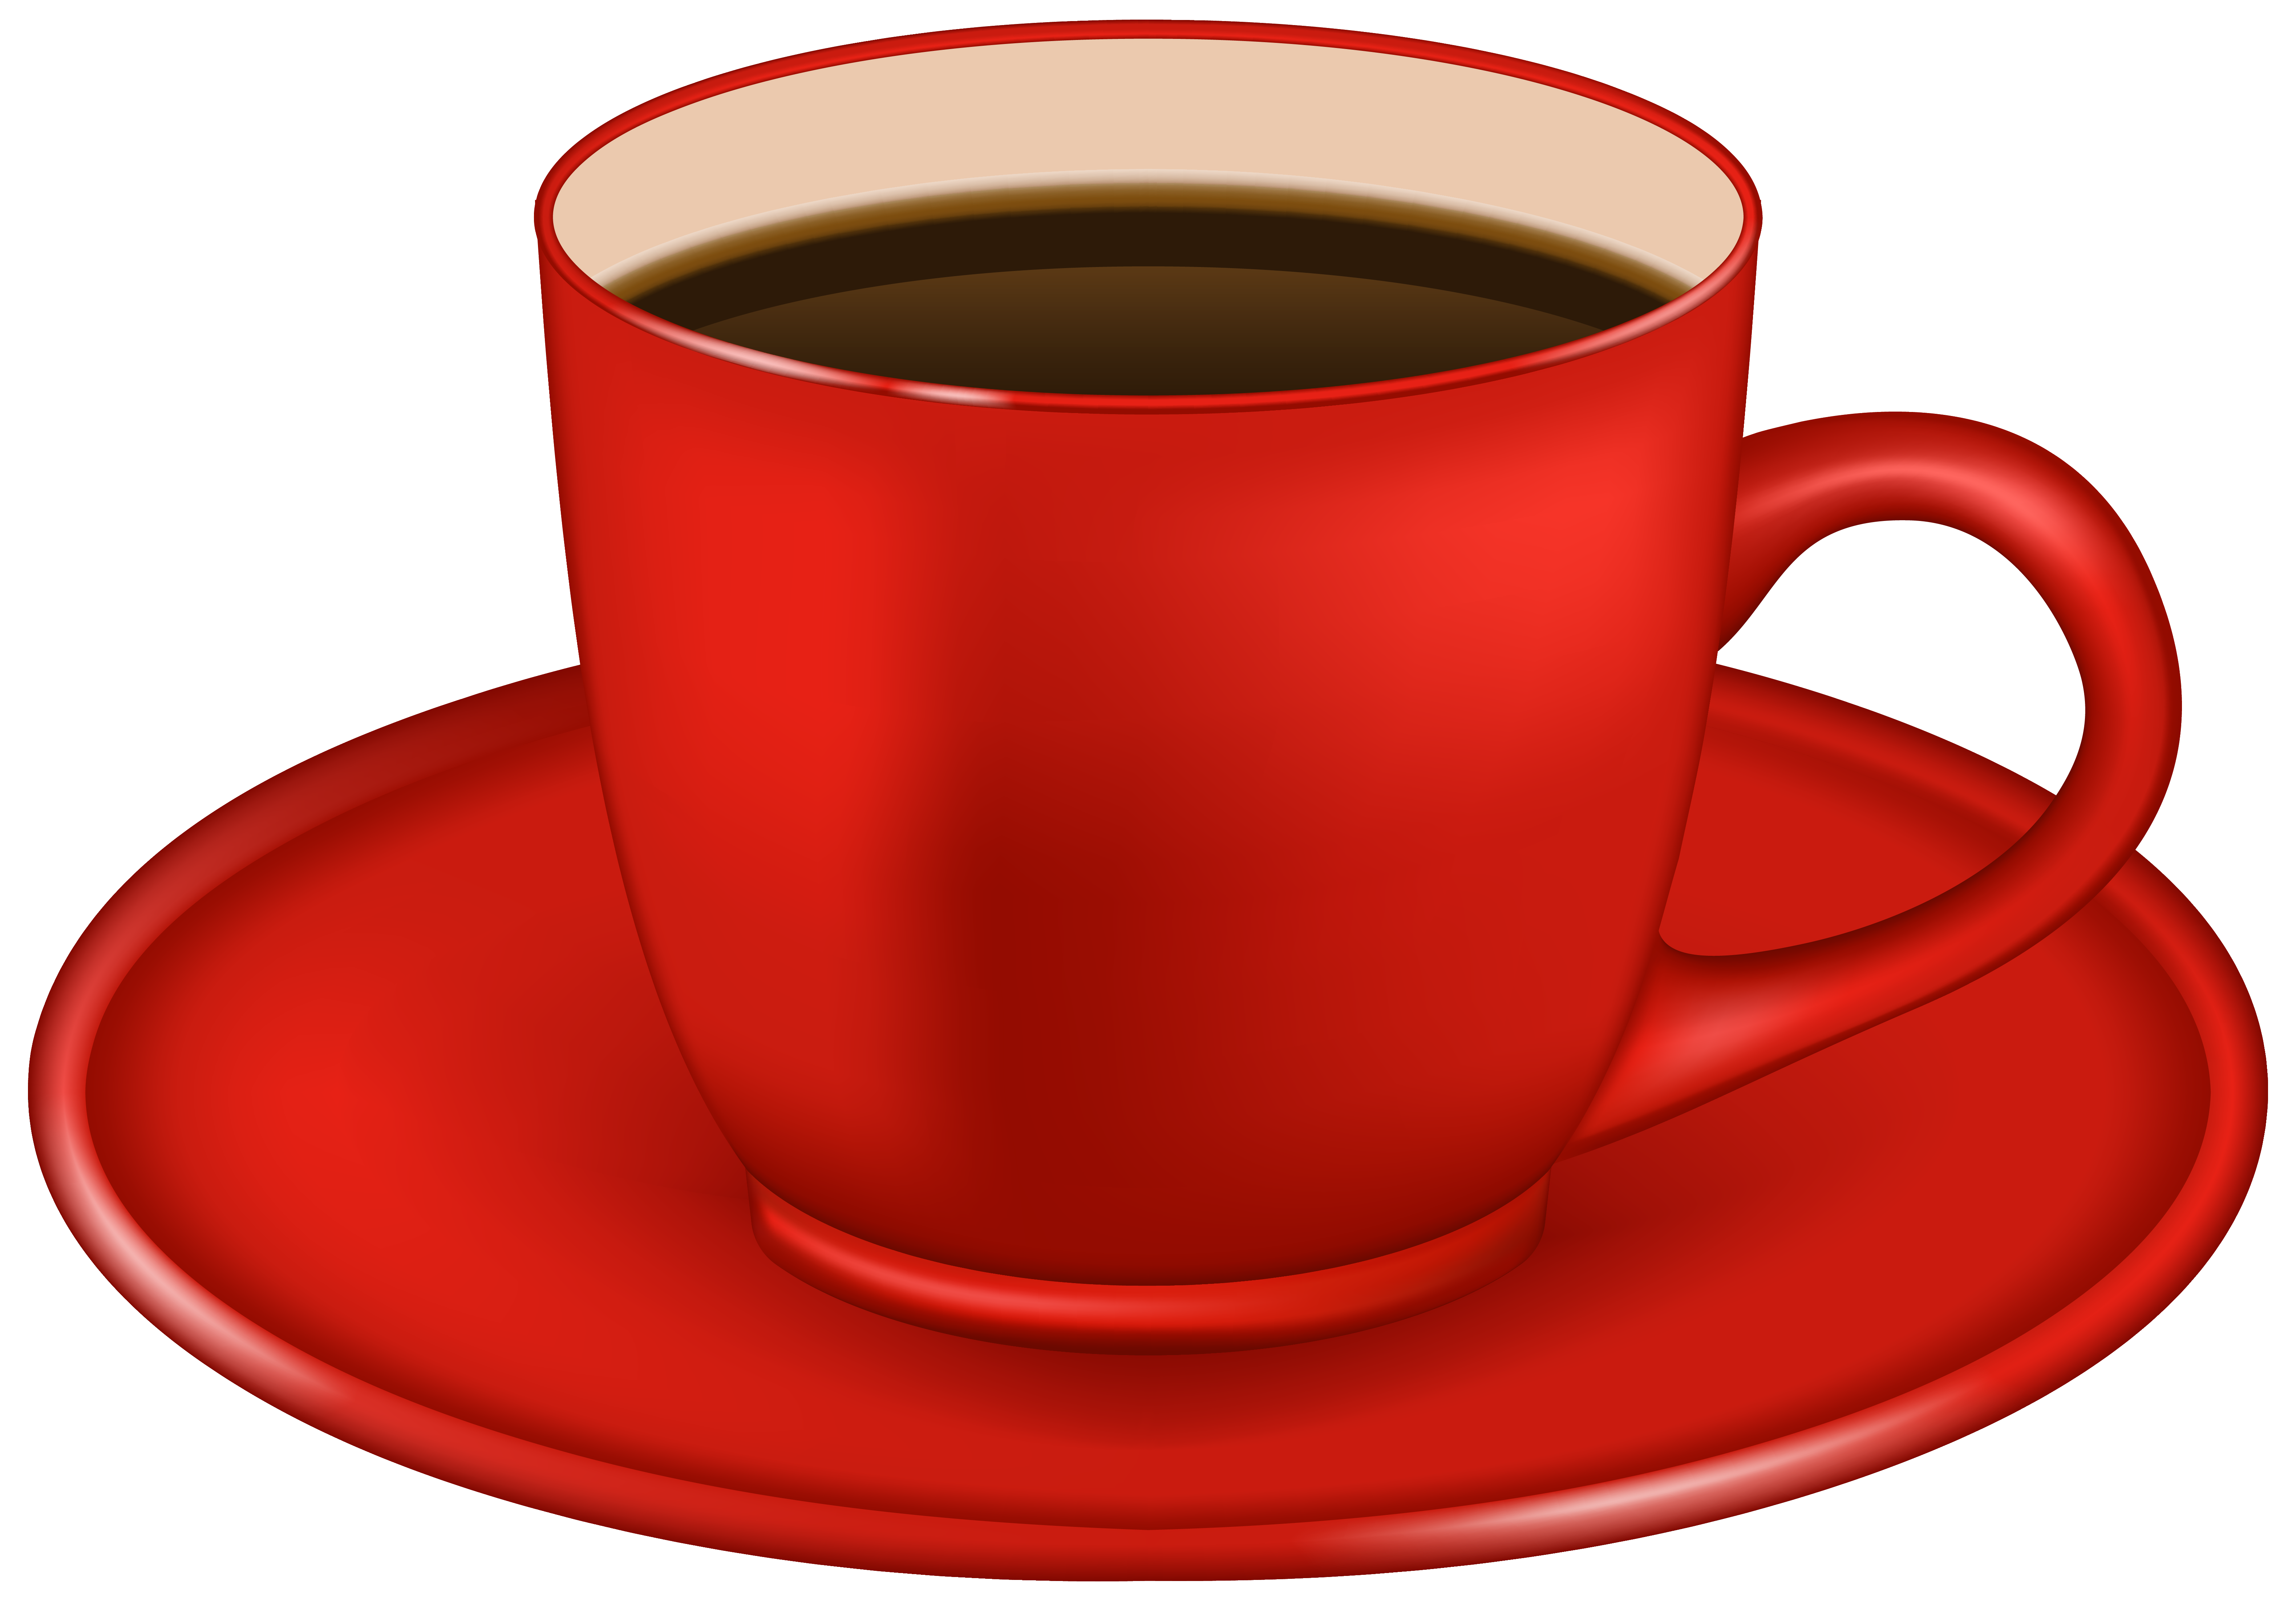 Single-Origin Cup Tea Espresso Coffee Cafe Red PNG Image